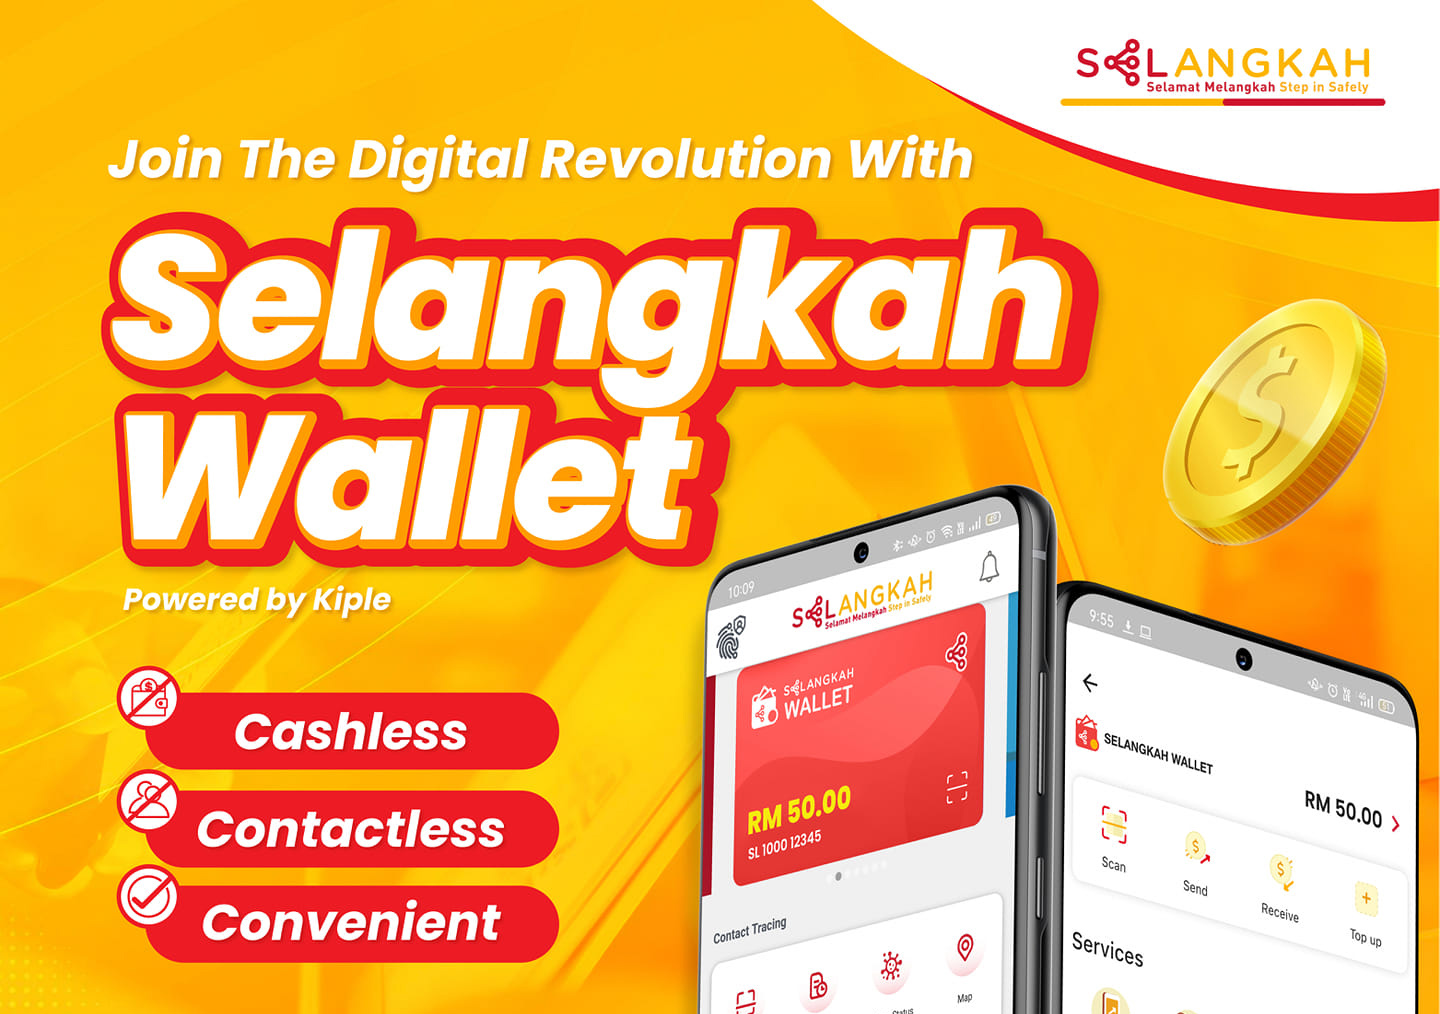 Selangkah Wallet launch